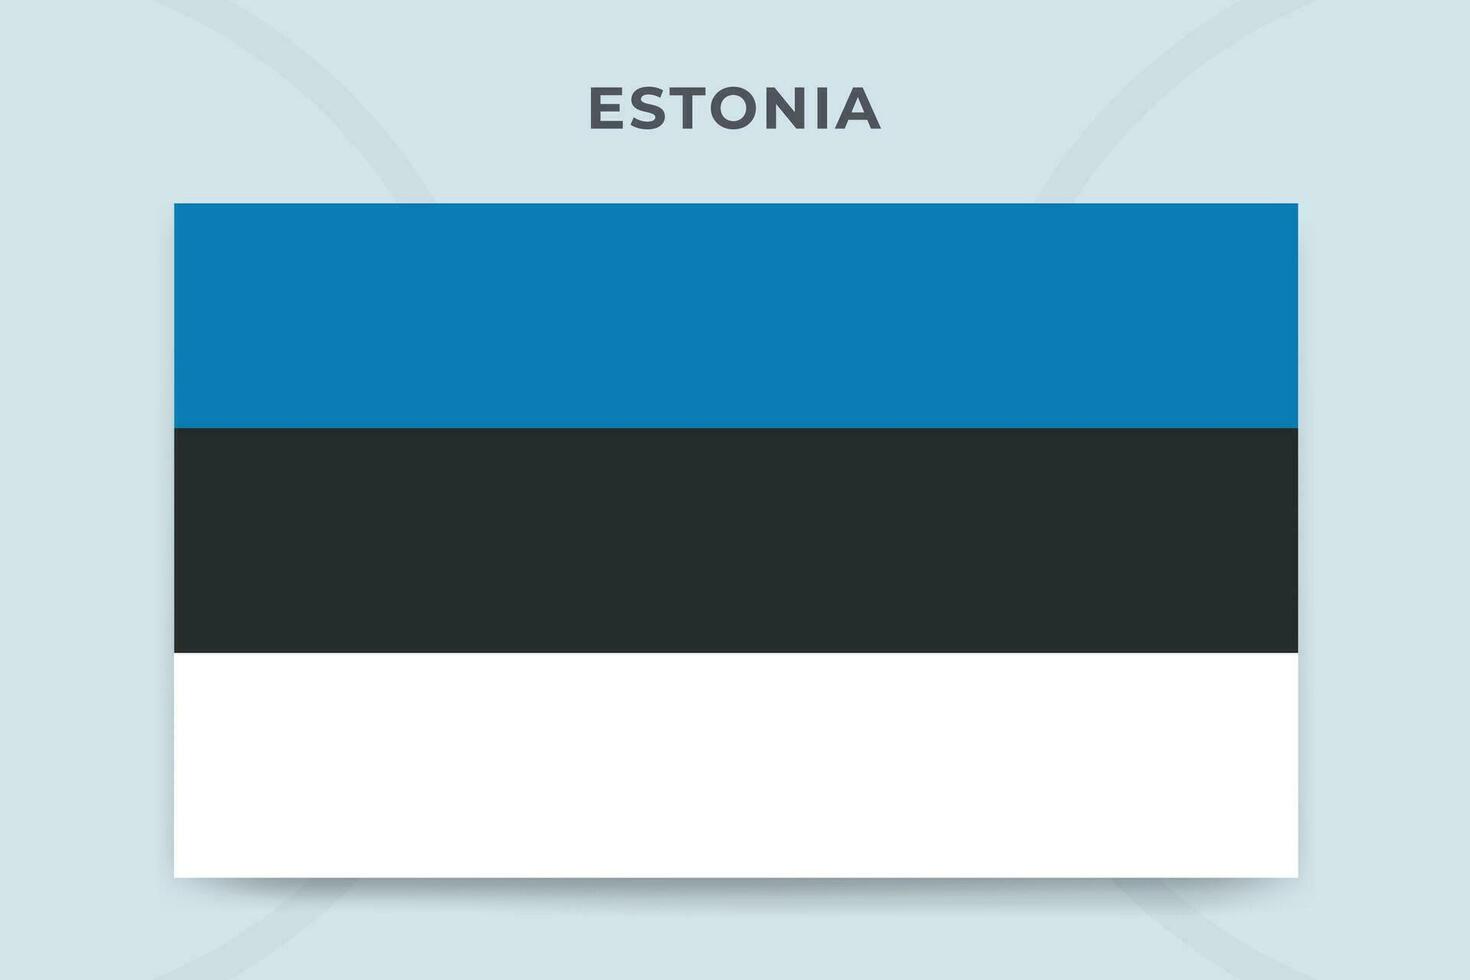 Estonia national flag design template vector